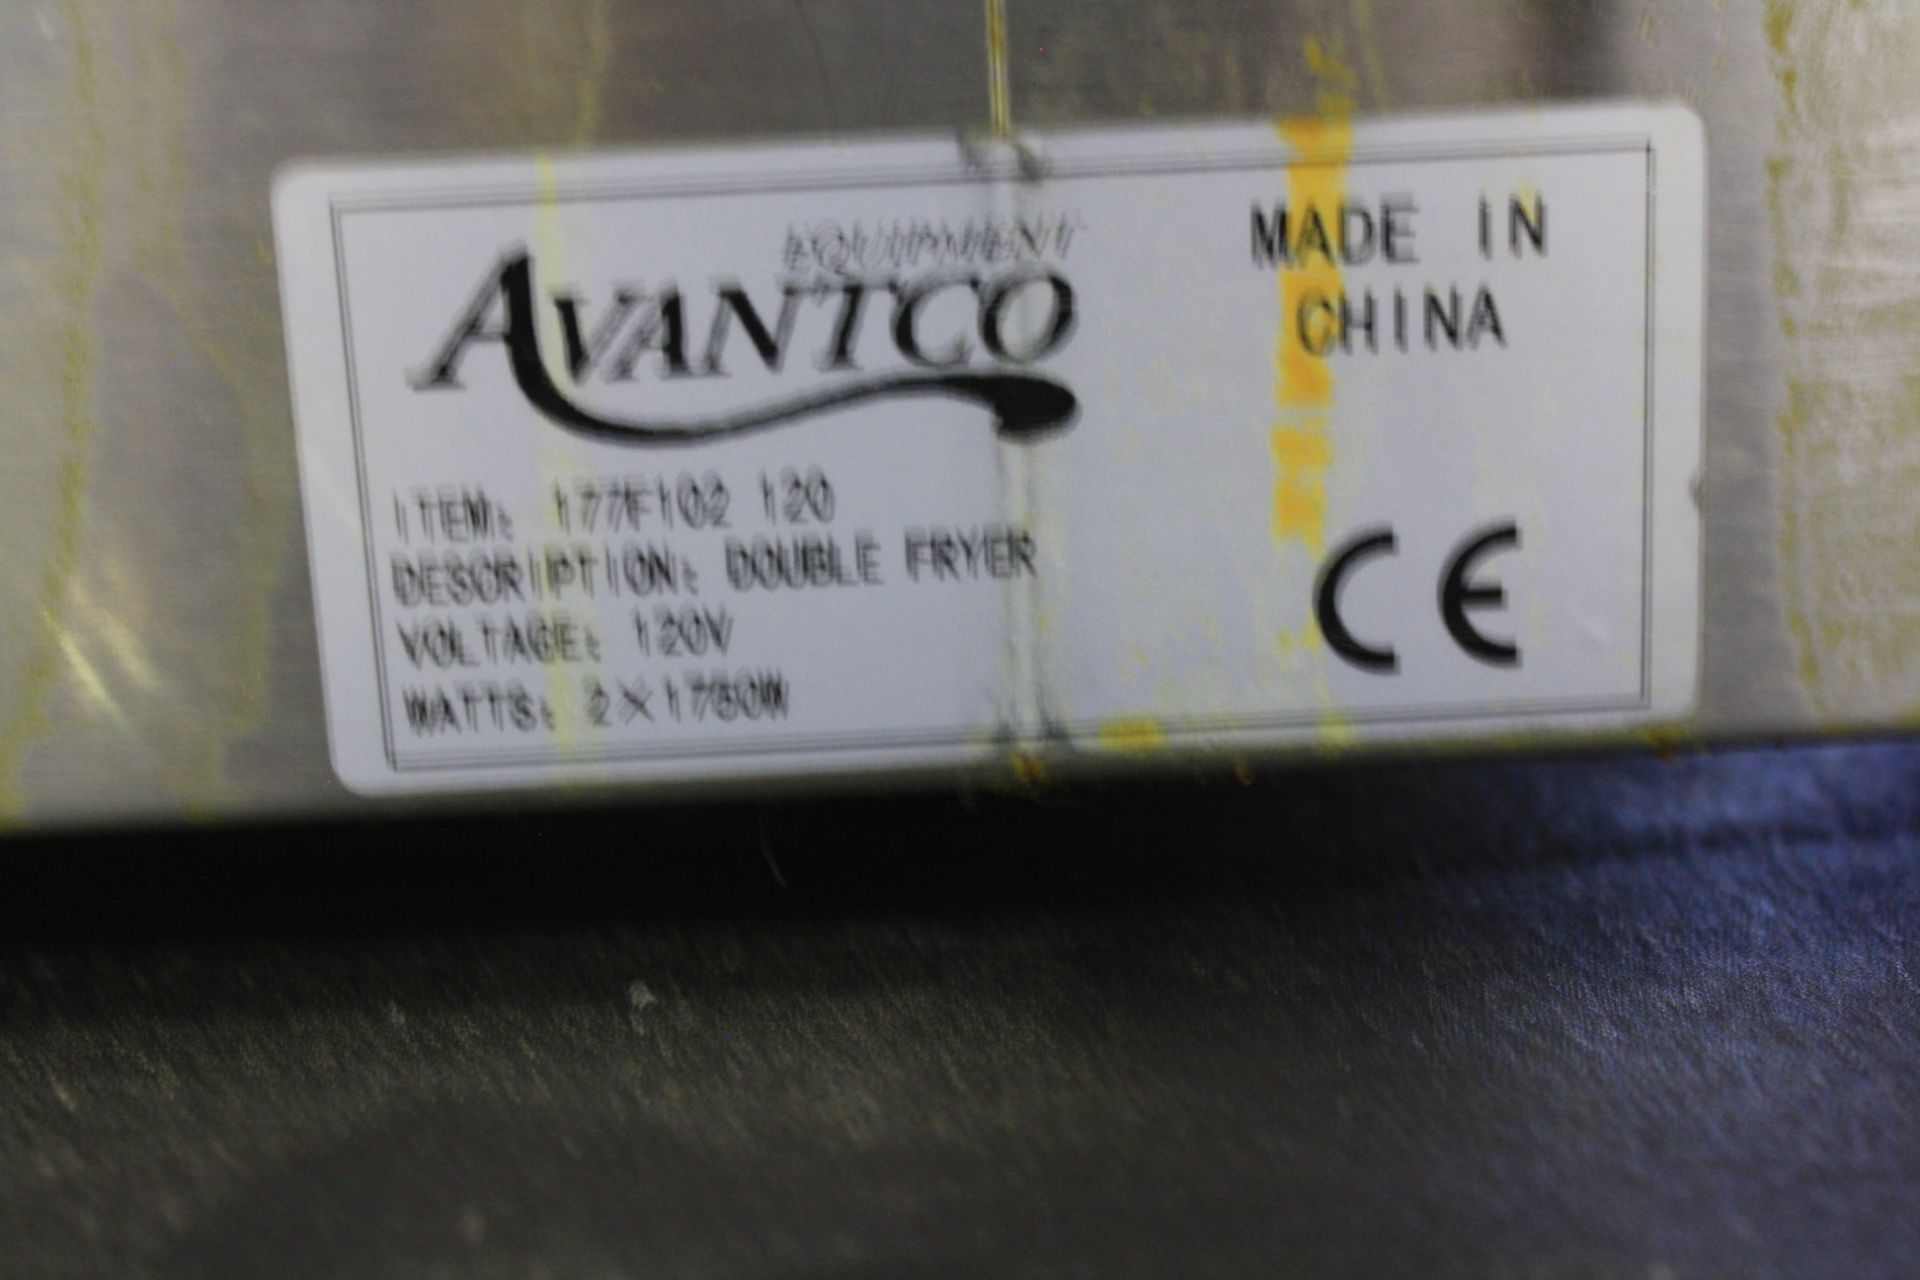 Avantco table top double fryer - Image 3 of 3